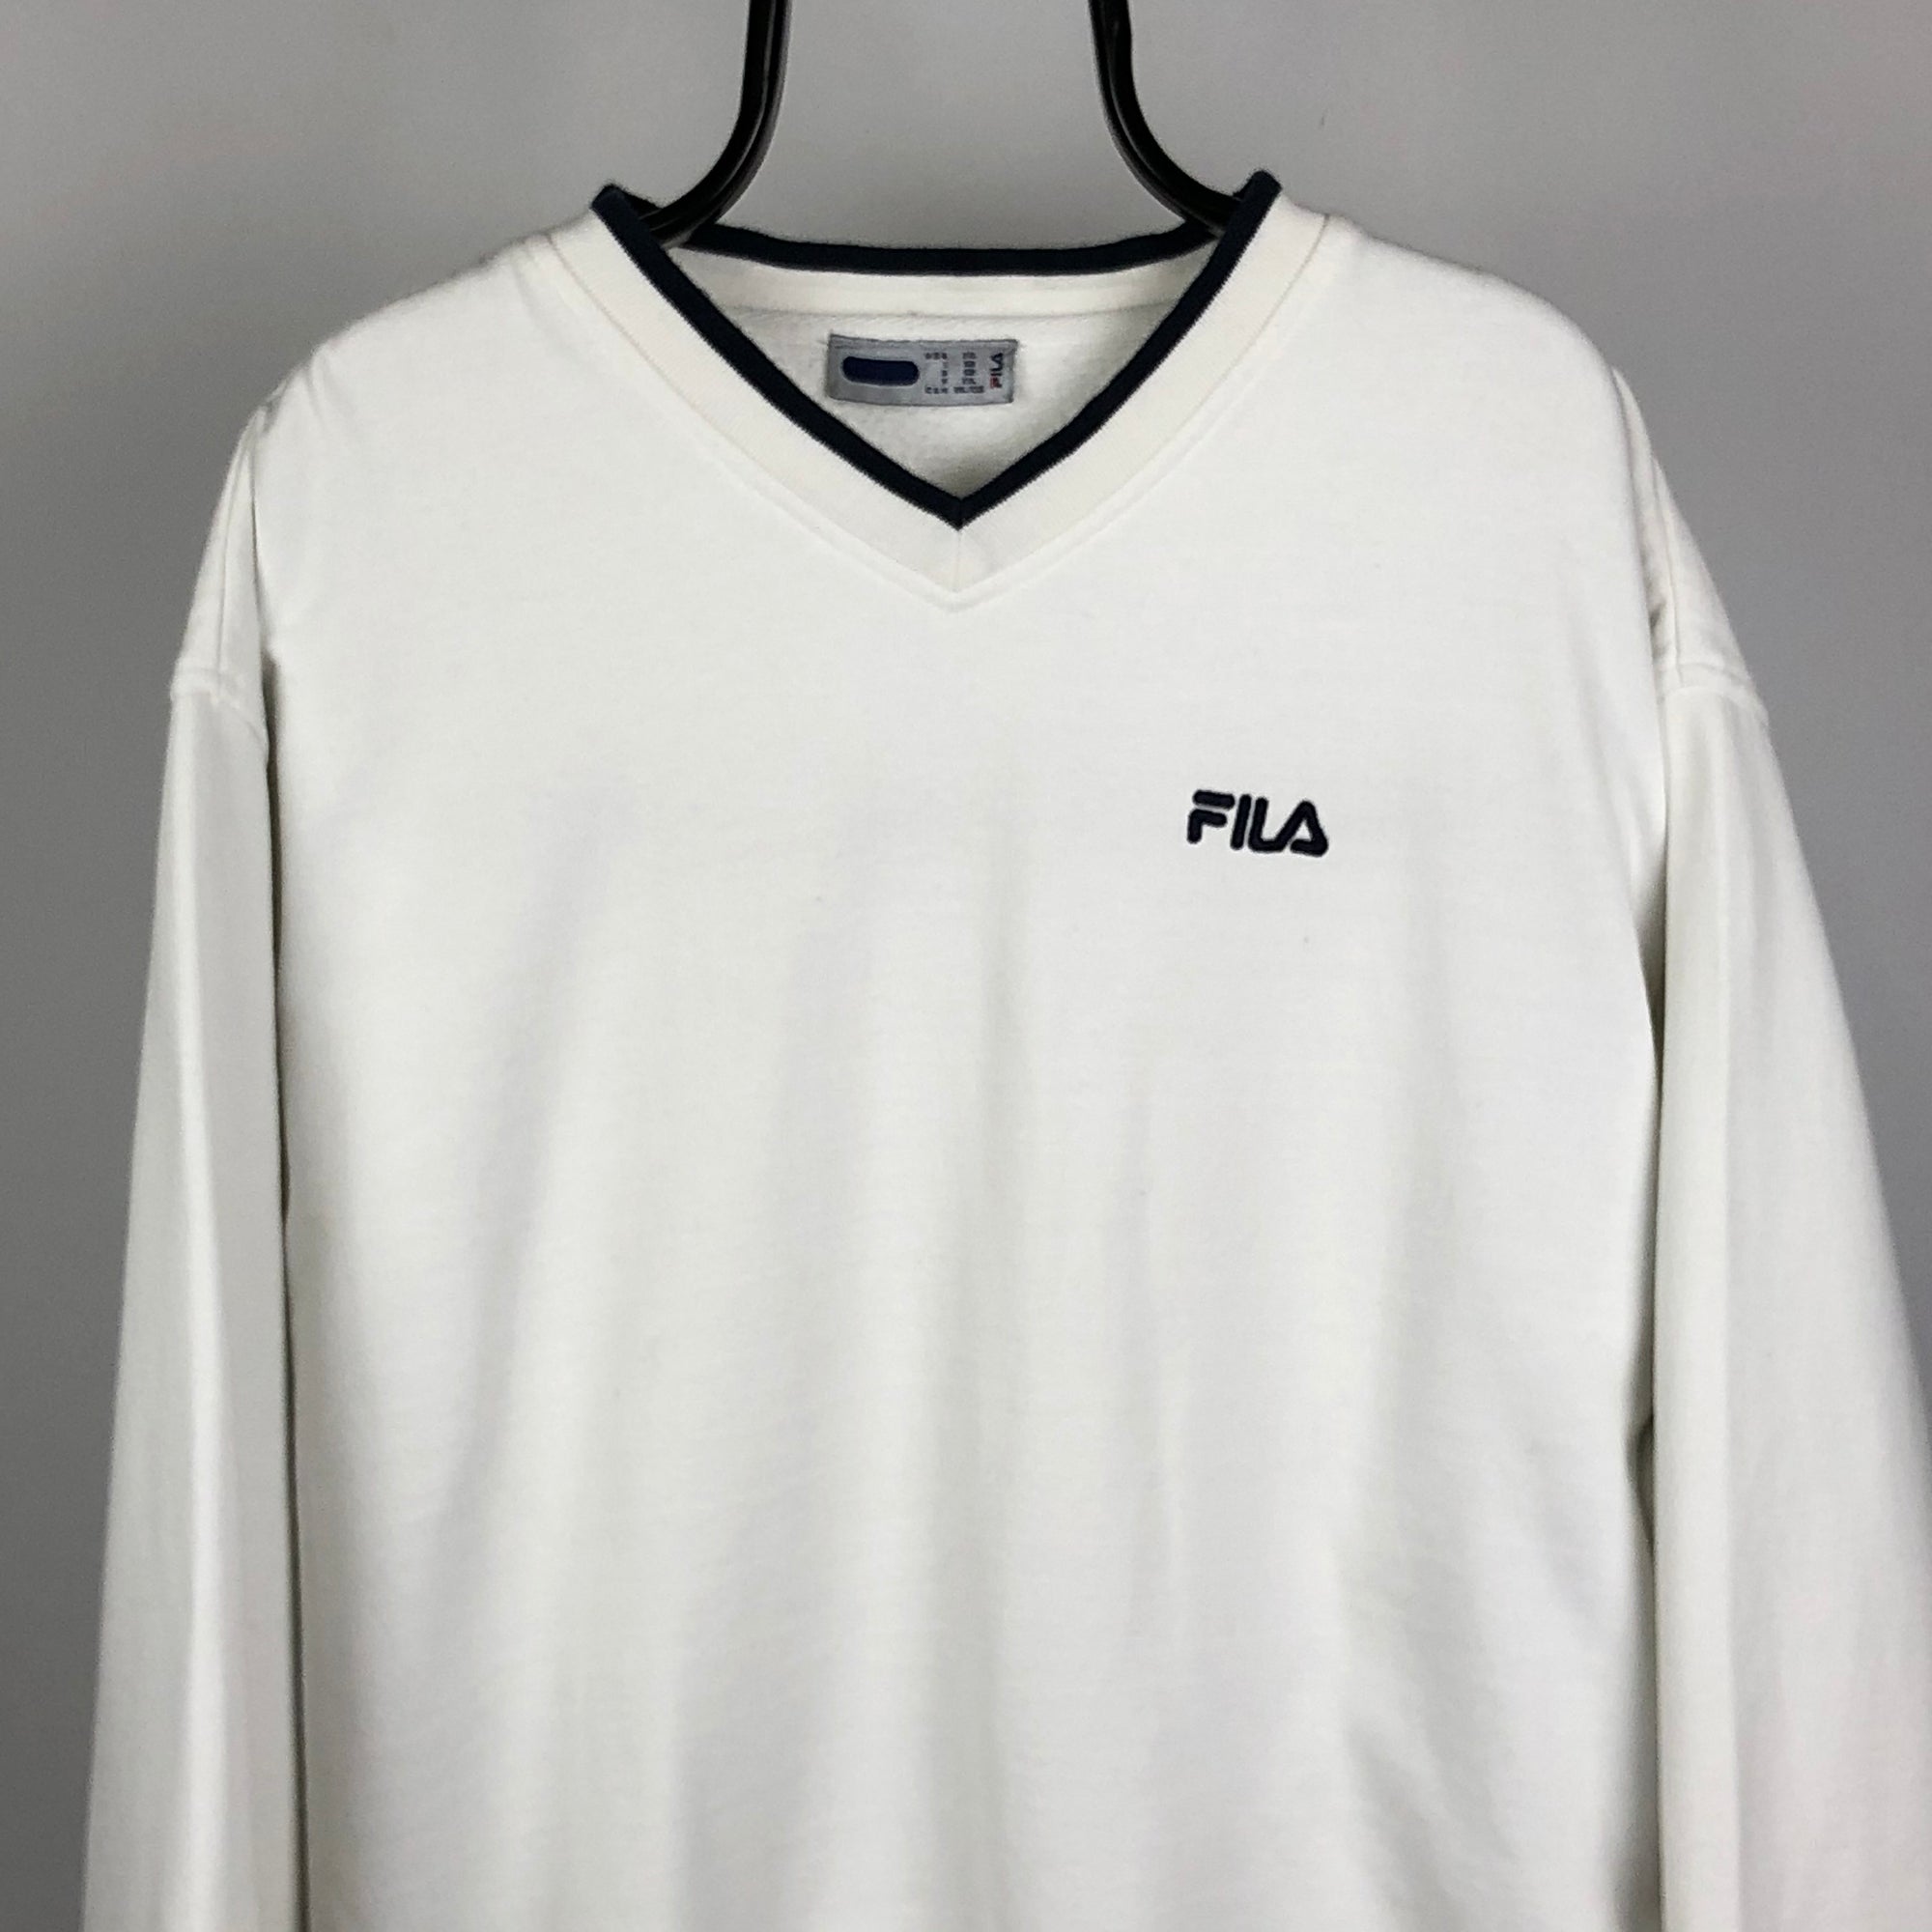 Vintage Fila Embroidered Small Spellout Sweatshirt in White/Navy - Men's XL/Women's XXL